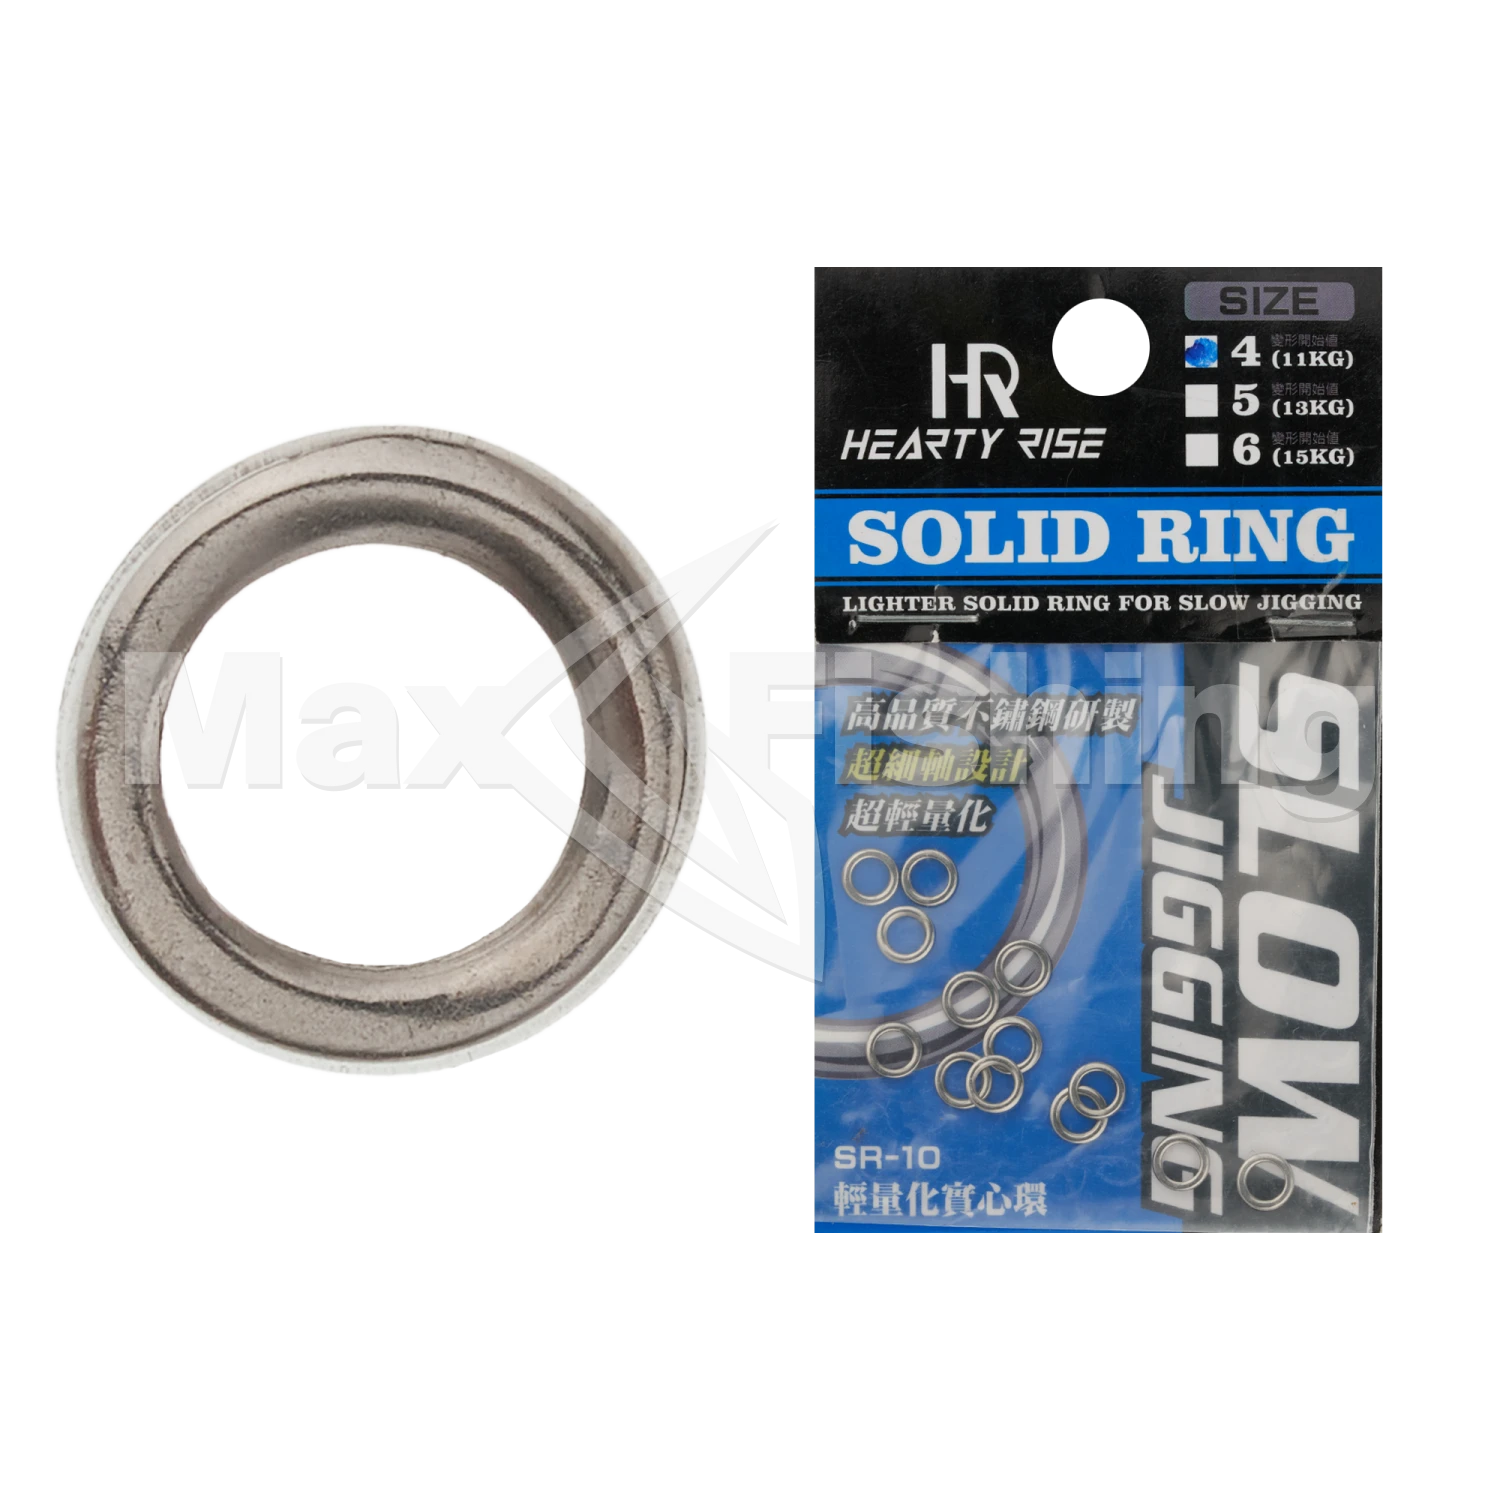 Кольцо заводное Hearty Rise Solid Ring SR-10 #4